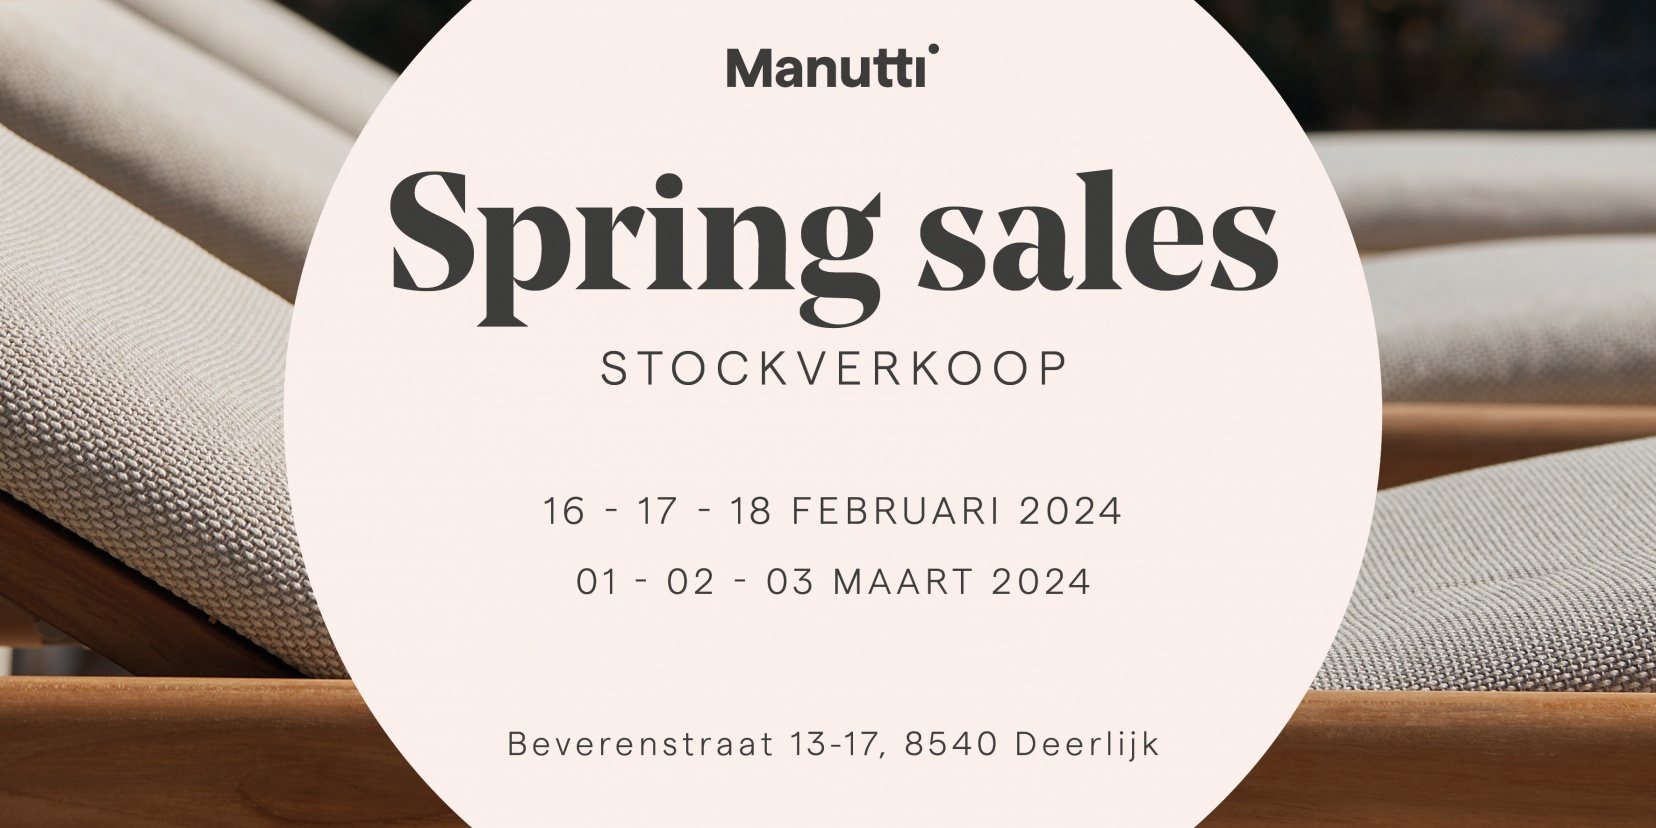 Manutti Spring Sale stockverkoop - 1